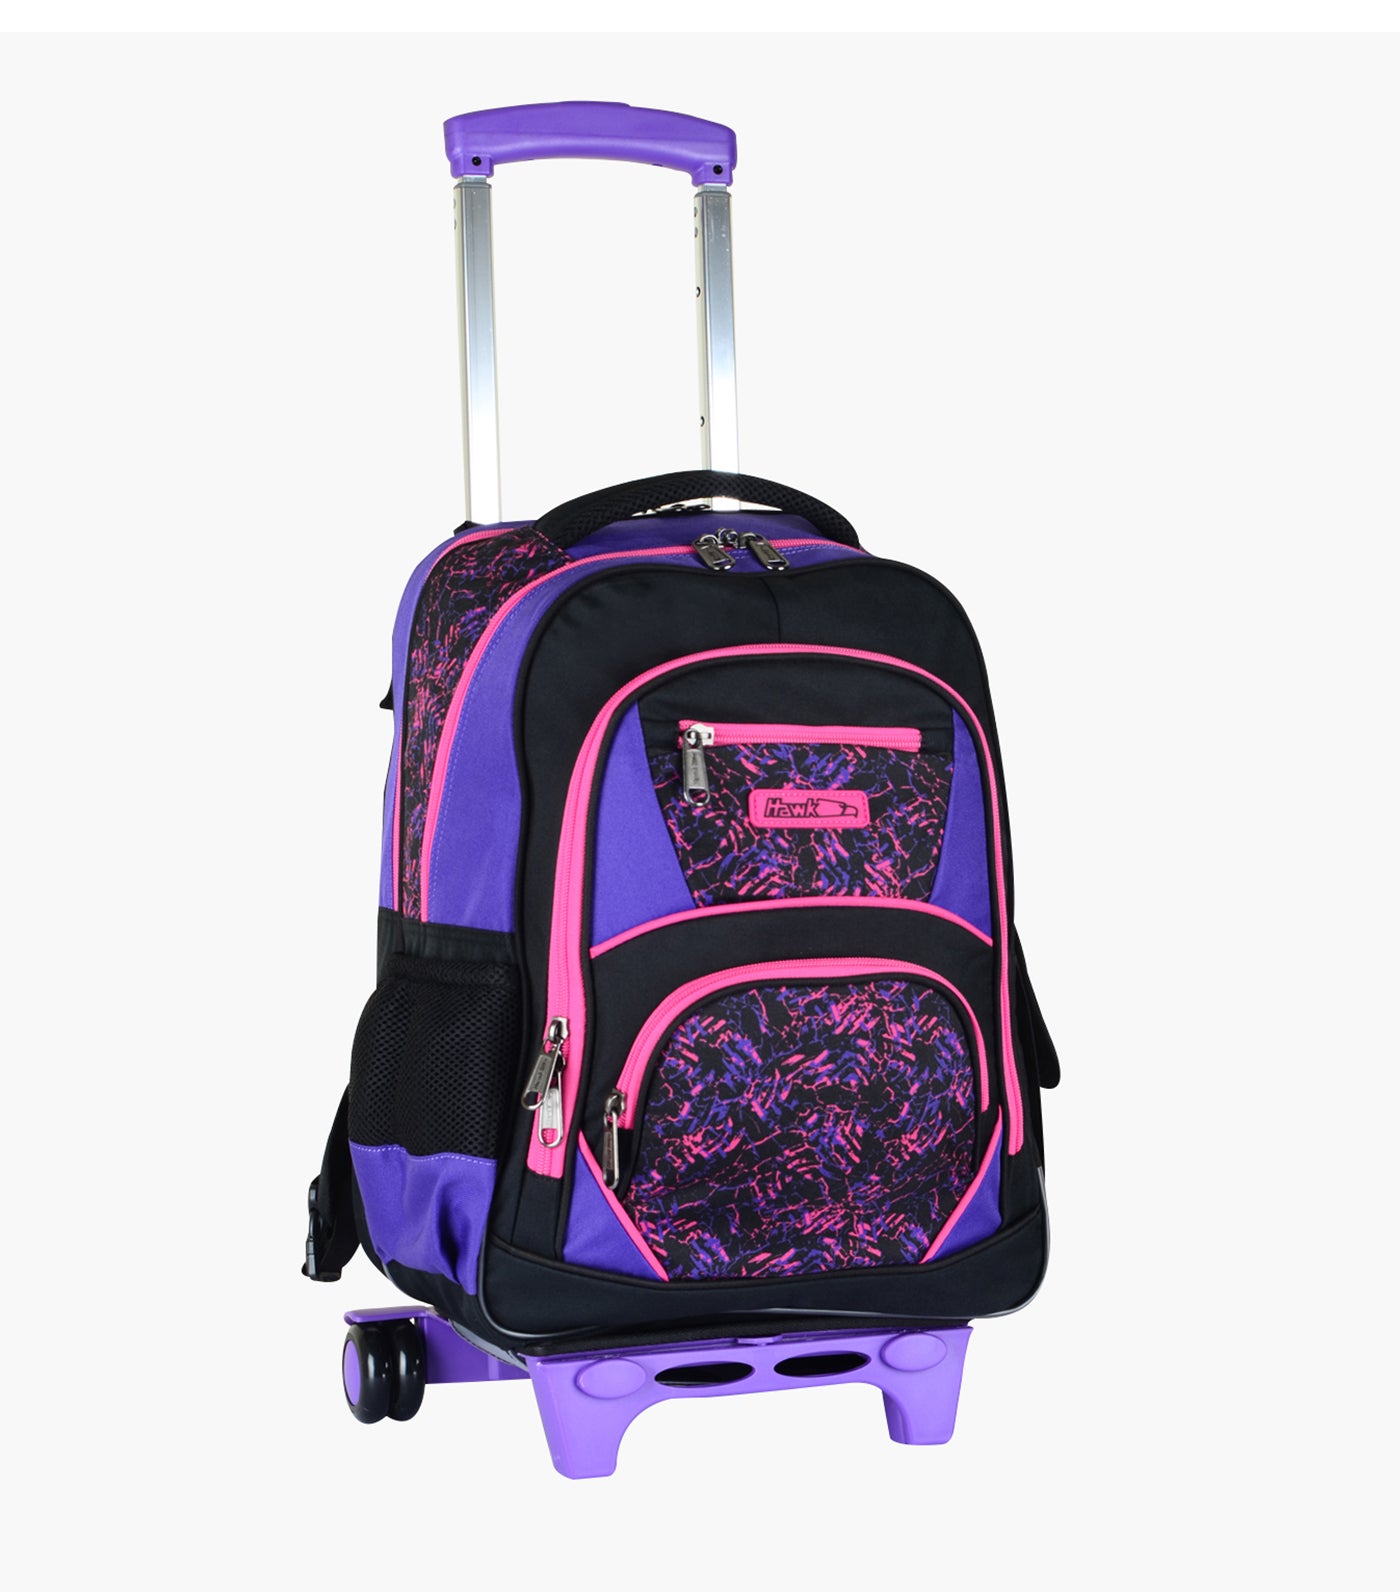 Large Backpack Stroller - Black and Purple